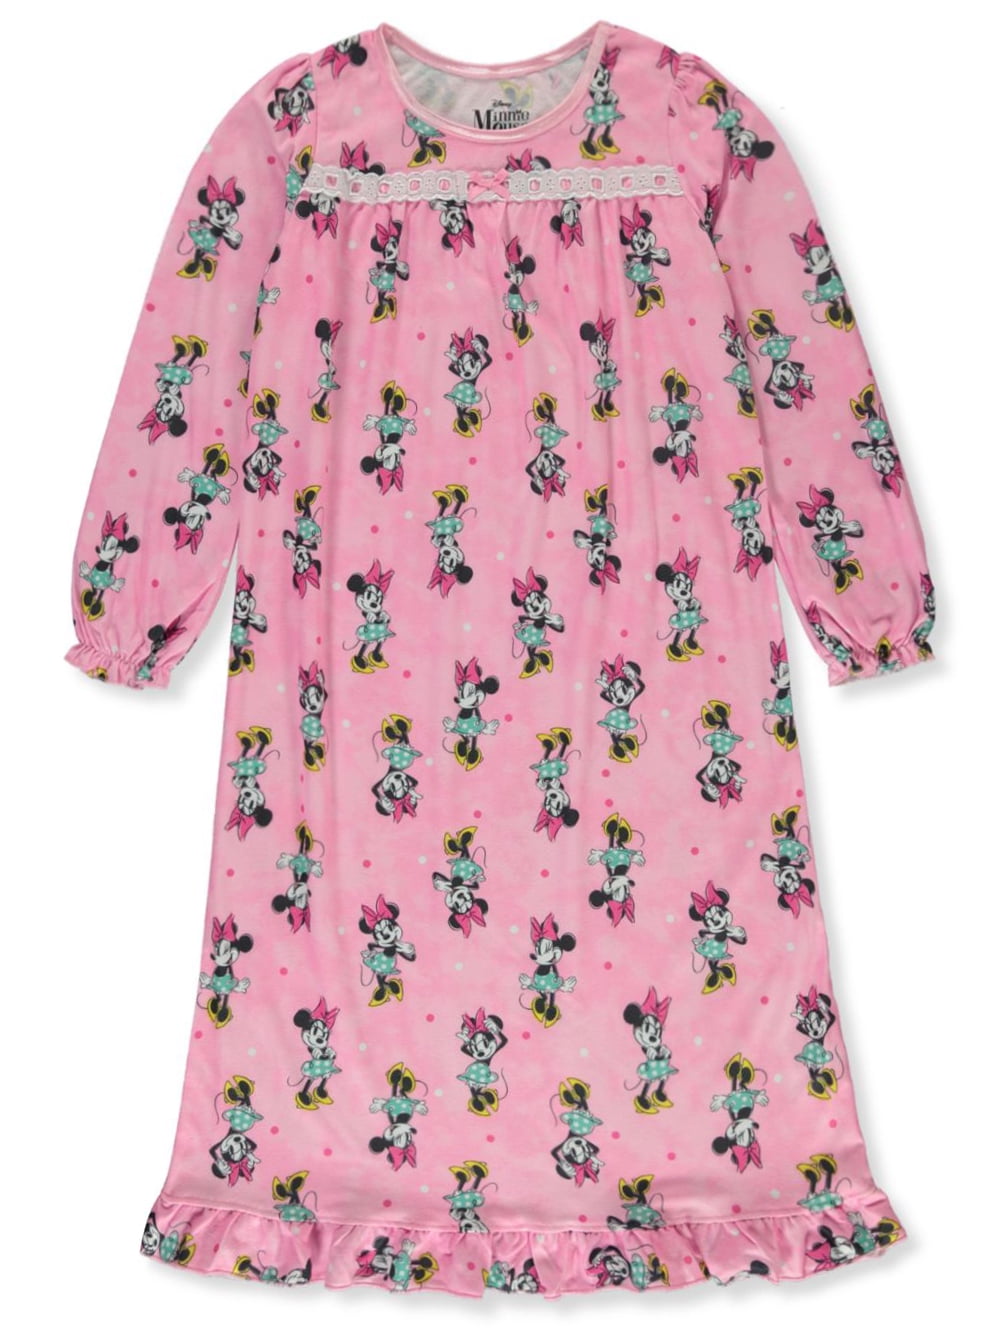 Disney Minnie Mouse Girls' Nightgown - pink/multi, 8 (Big Girls ...